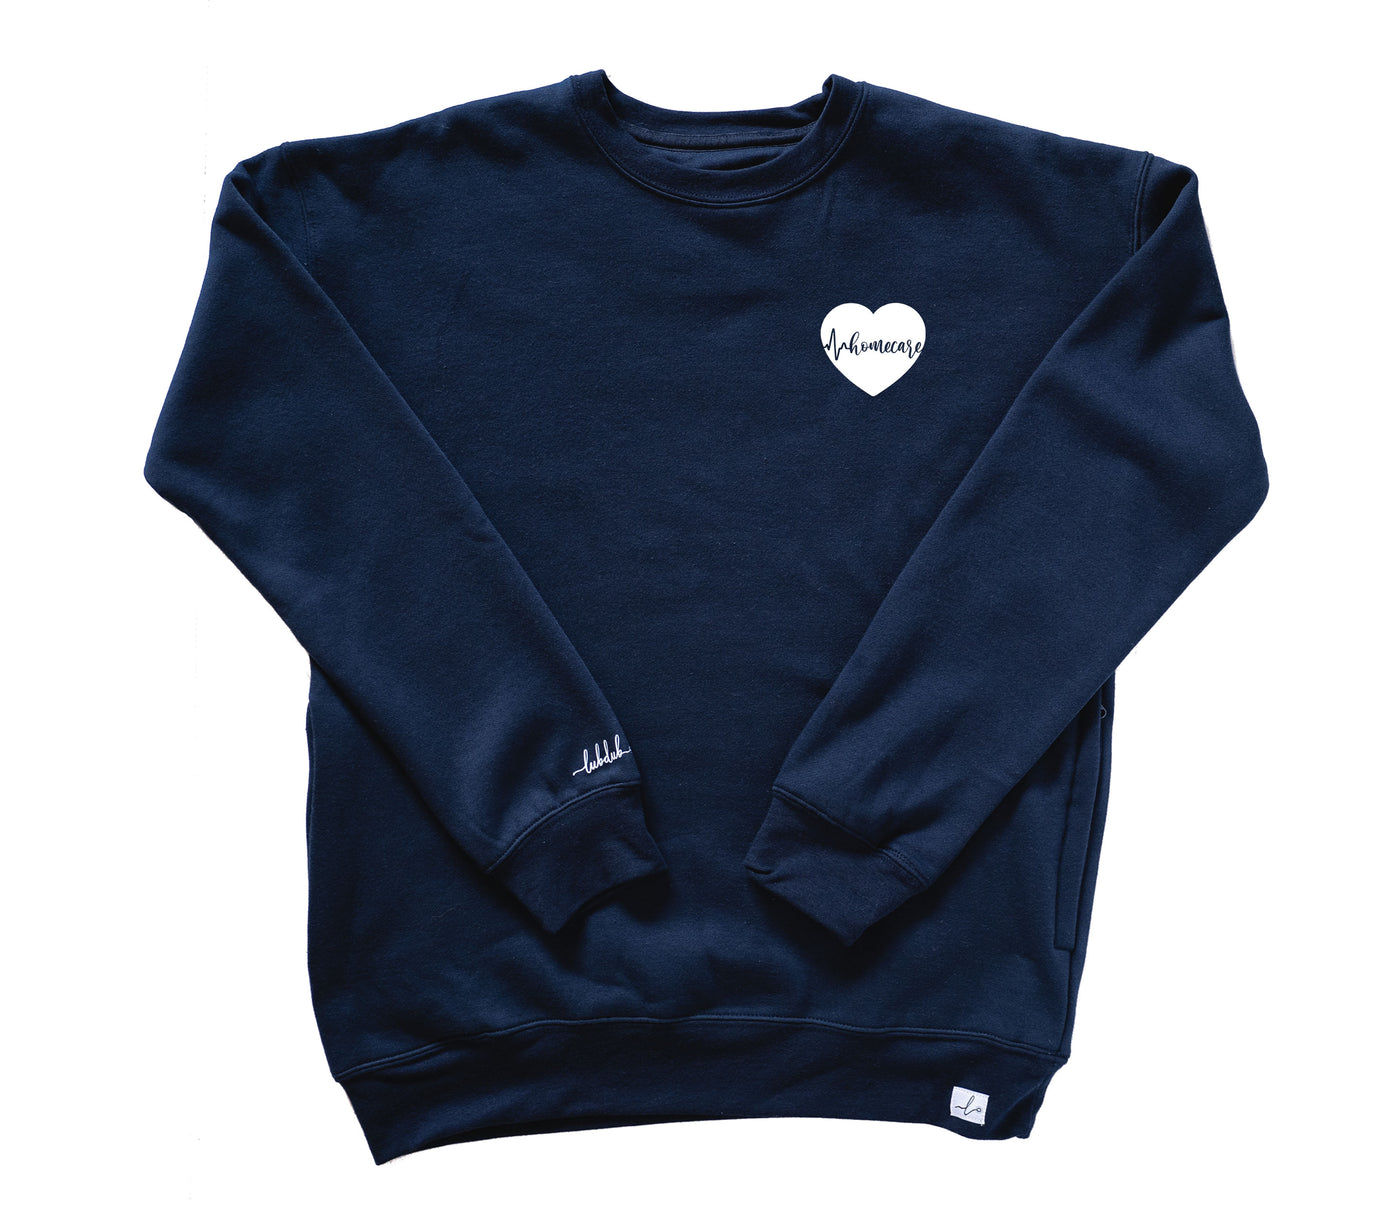 Homecare ECG Heart - Pocketed Crew Sweatshirt